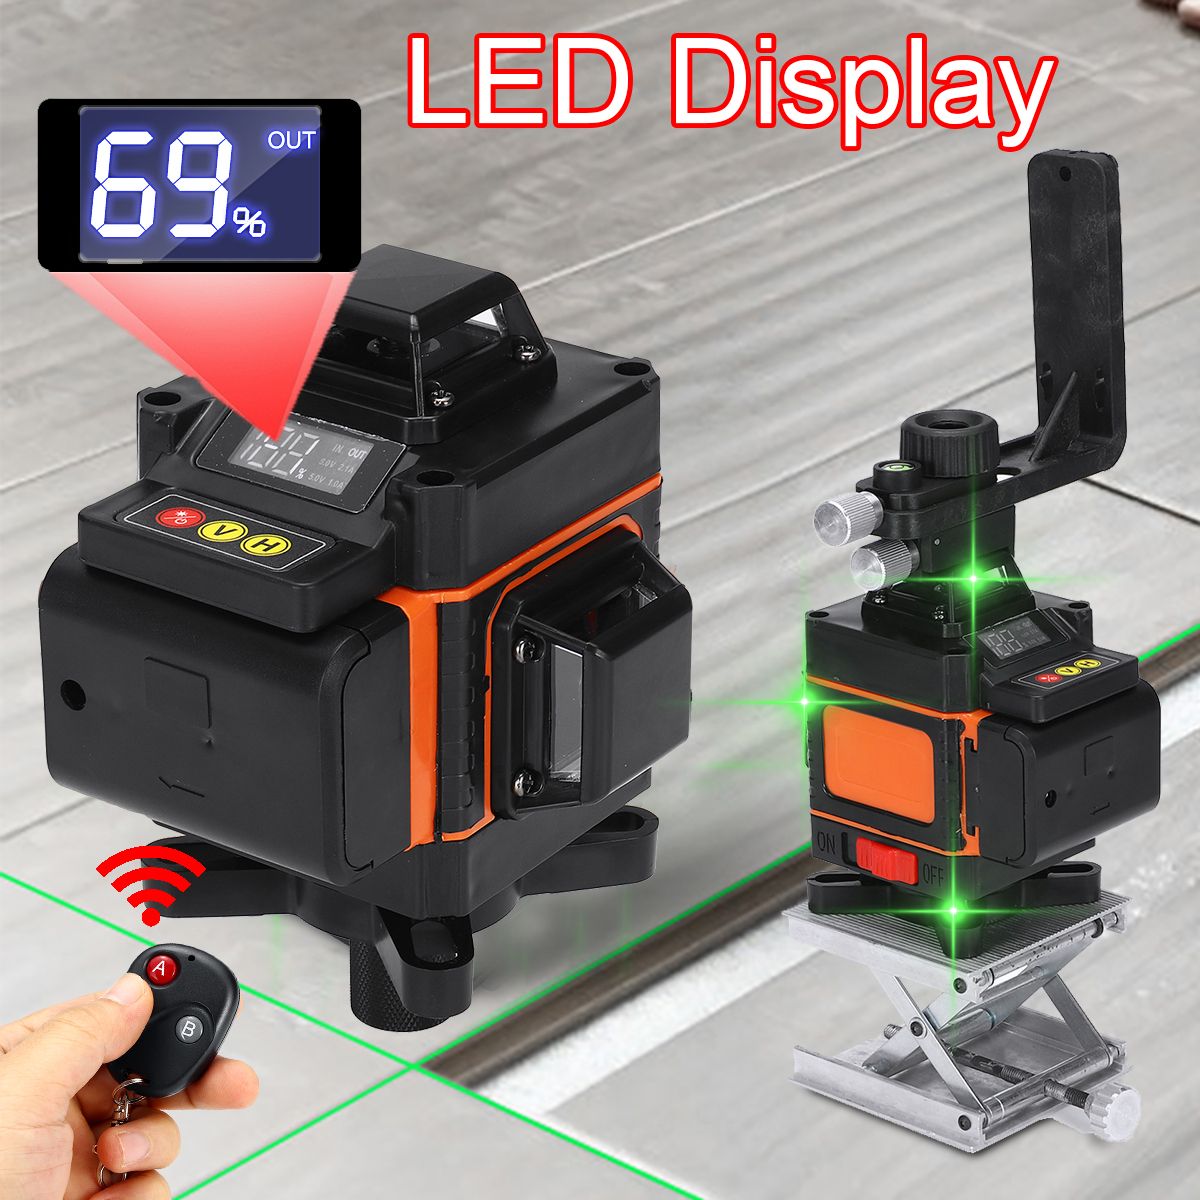 4D-16-Lines-Laser-Level-Green-Light-Auto-Self-Leveling-360deg-Rotary-Measure-Tool-1636661